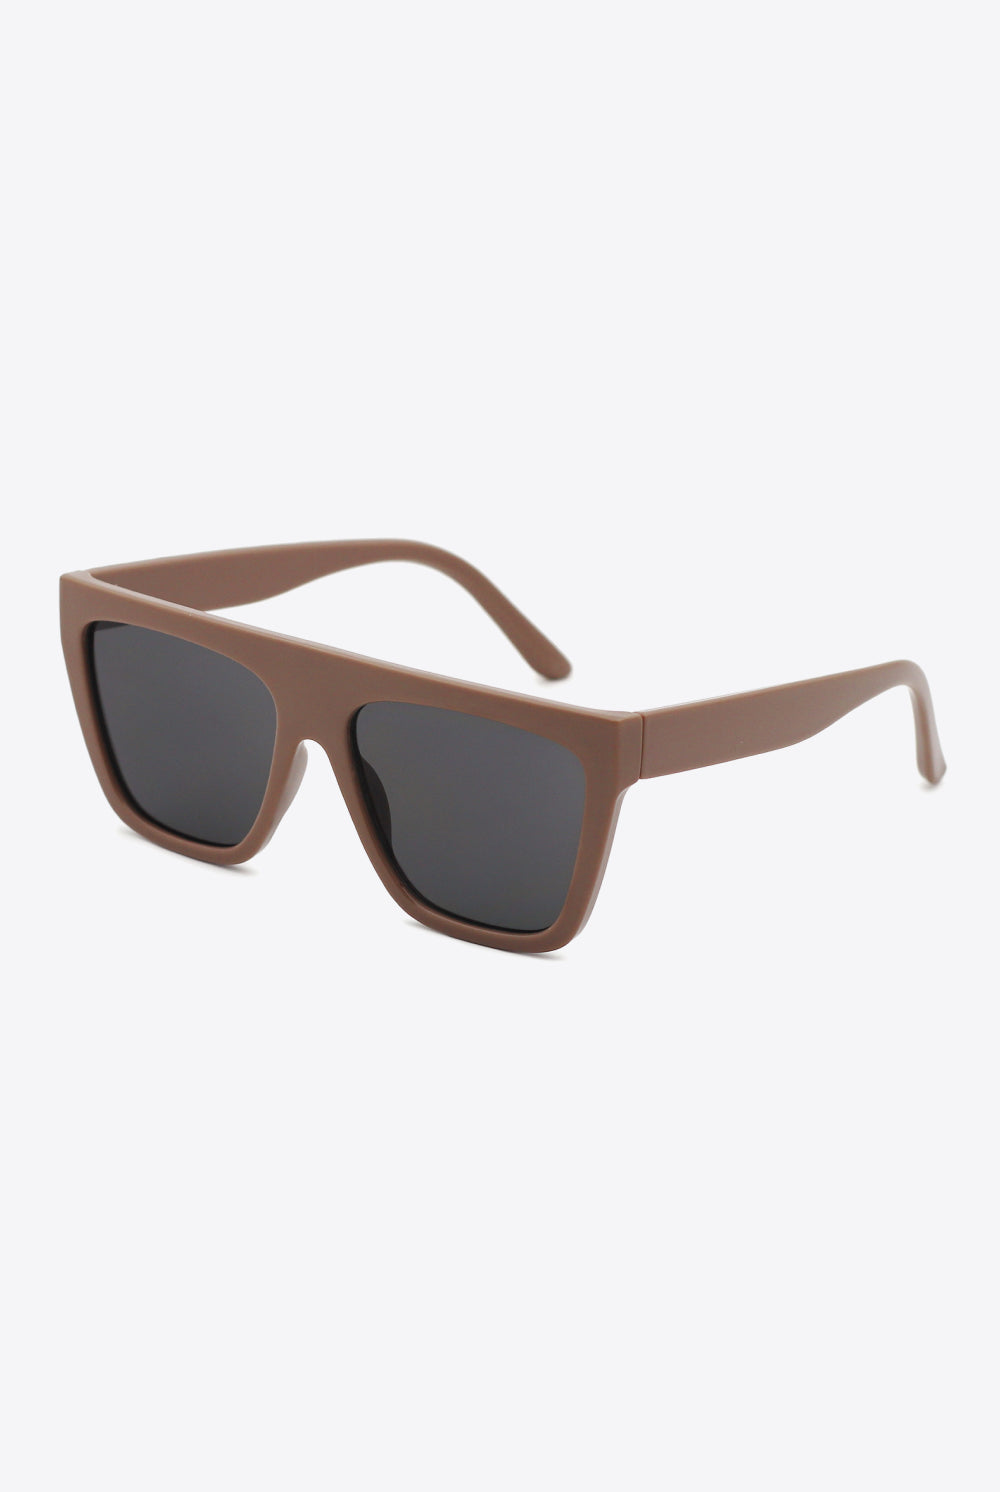 White Smoke Listening To A Song UV400 Polycarbonate Wayfarer Sunglasses Sunglasses